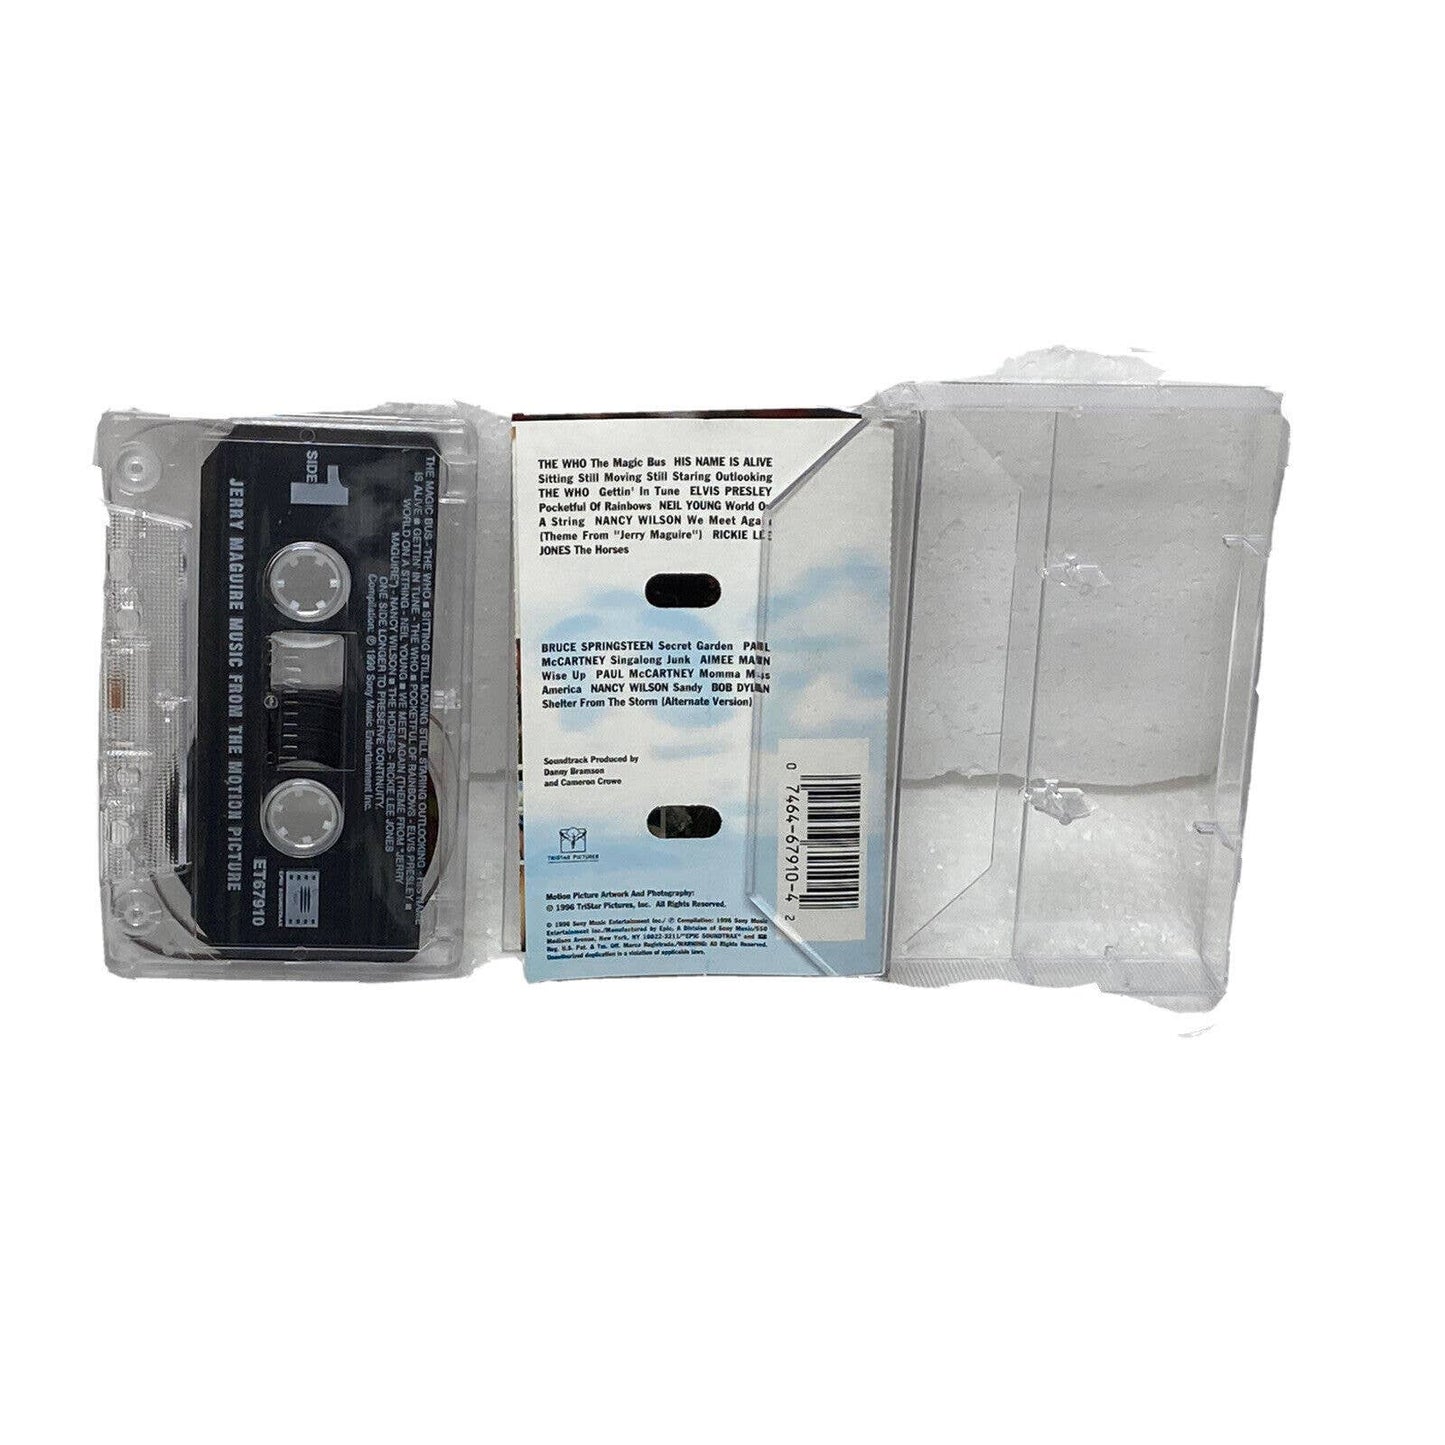 Jerry Mcguire Motion Picture Soundtrack Cassette Tape Vintage Springsteen